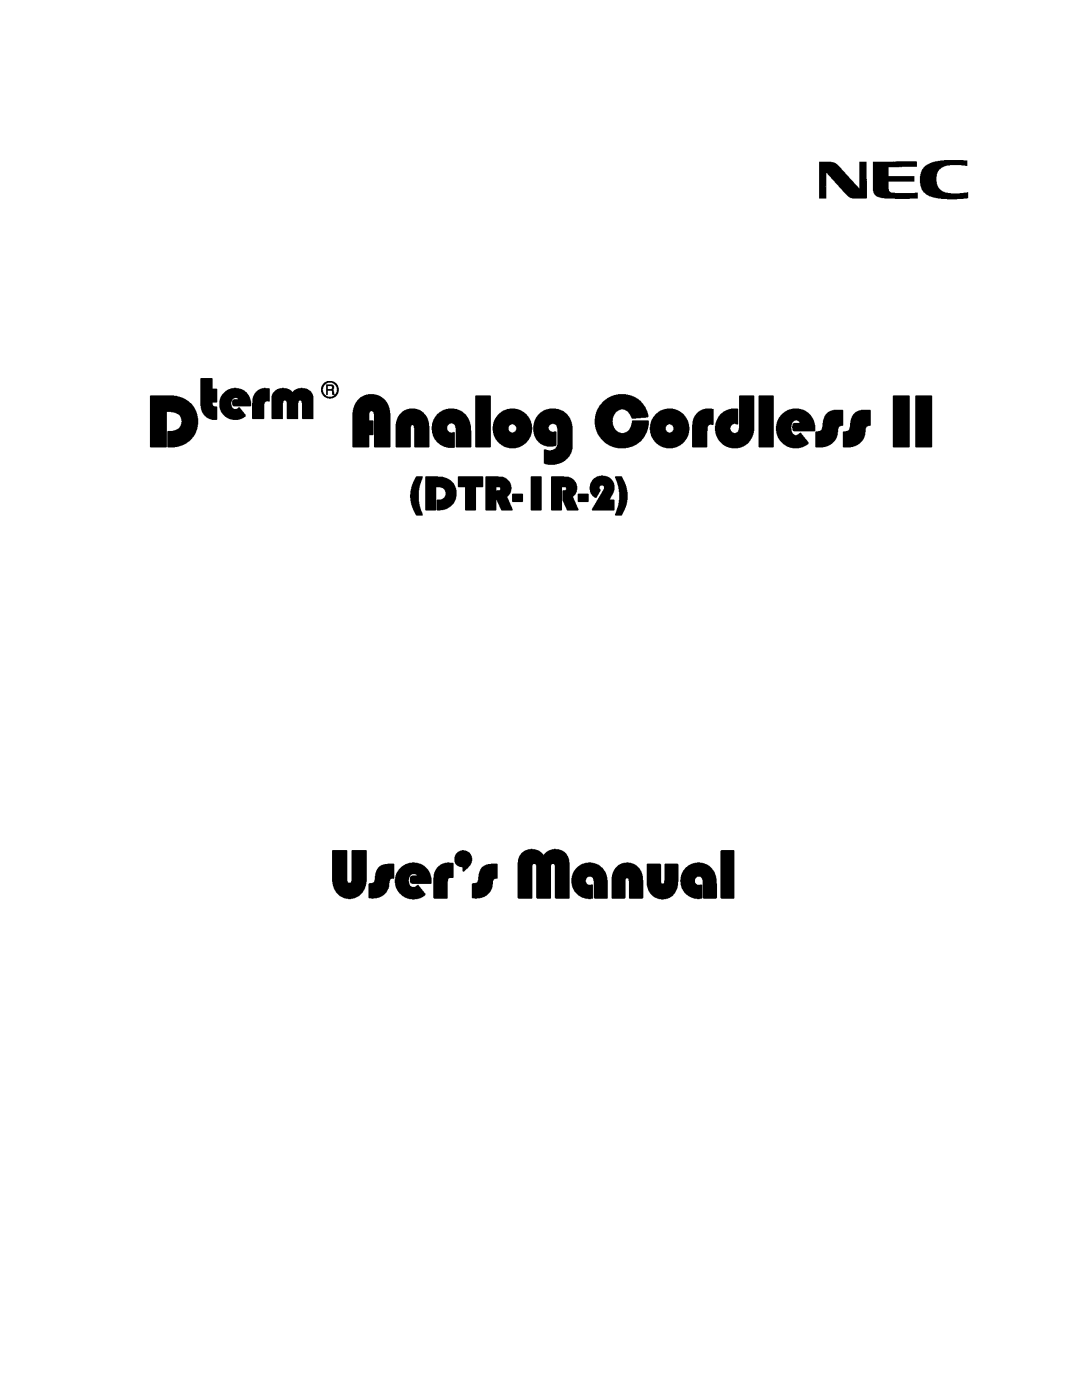 NEC DTR-IR-2 user manual DTR-1R-2, Dterm Analog Cordless, User’s Manual 